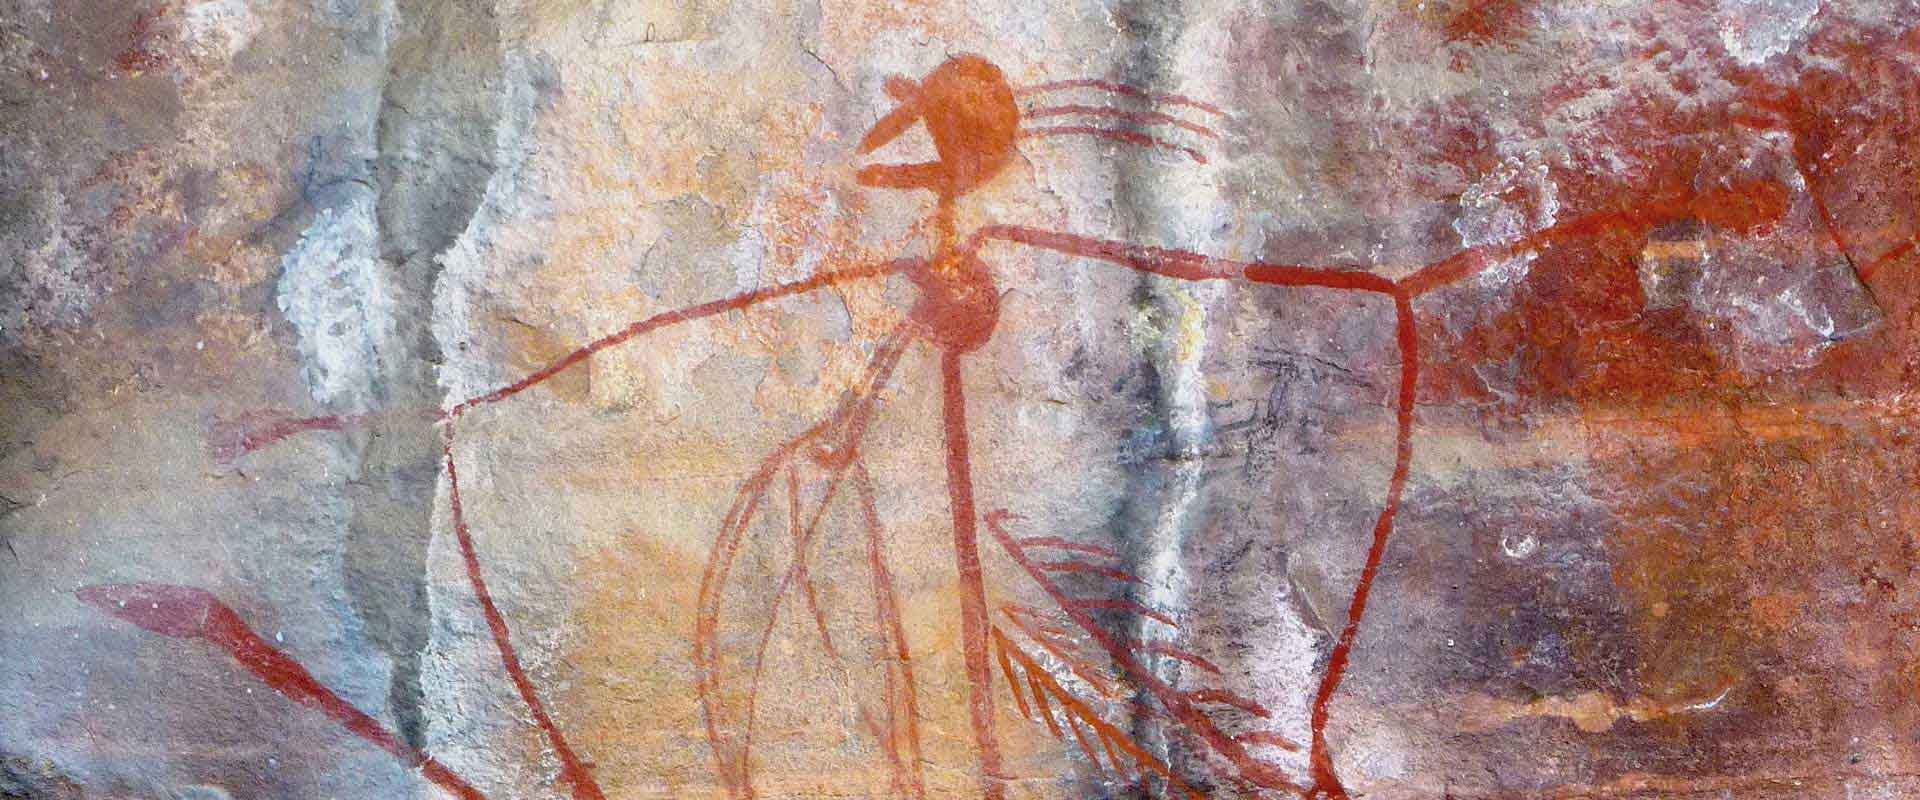 Indigenous rock art figure ubirr kakadu nt